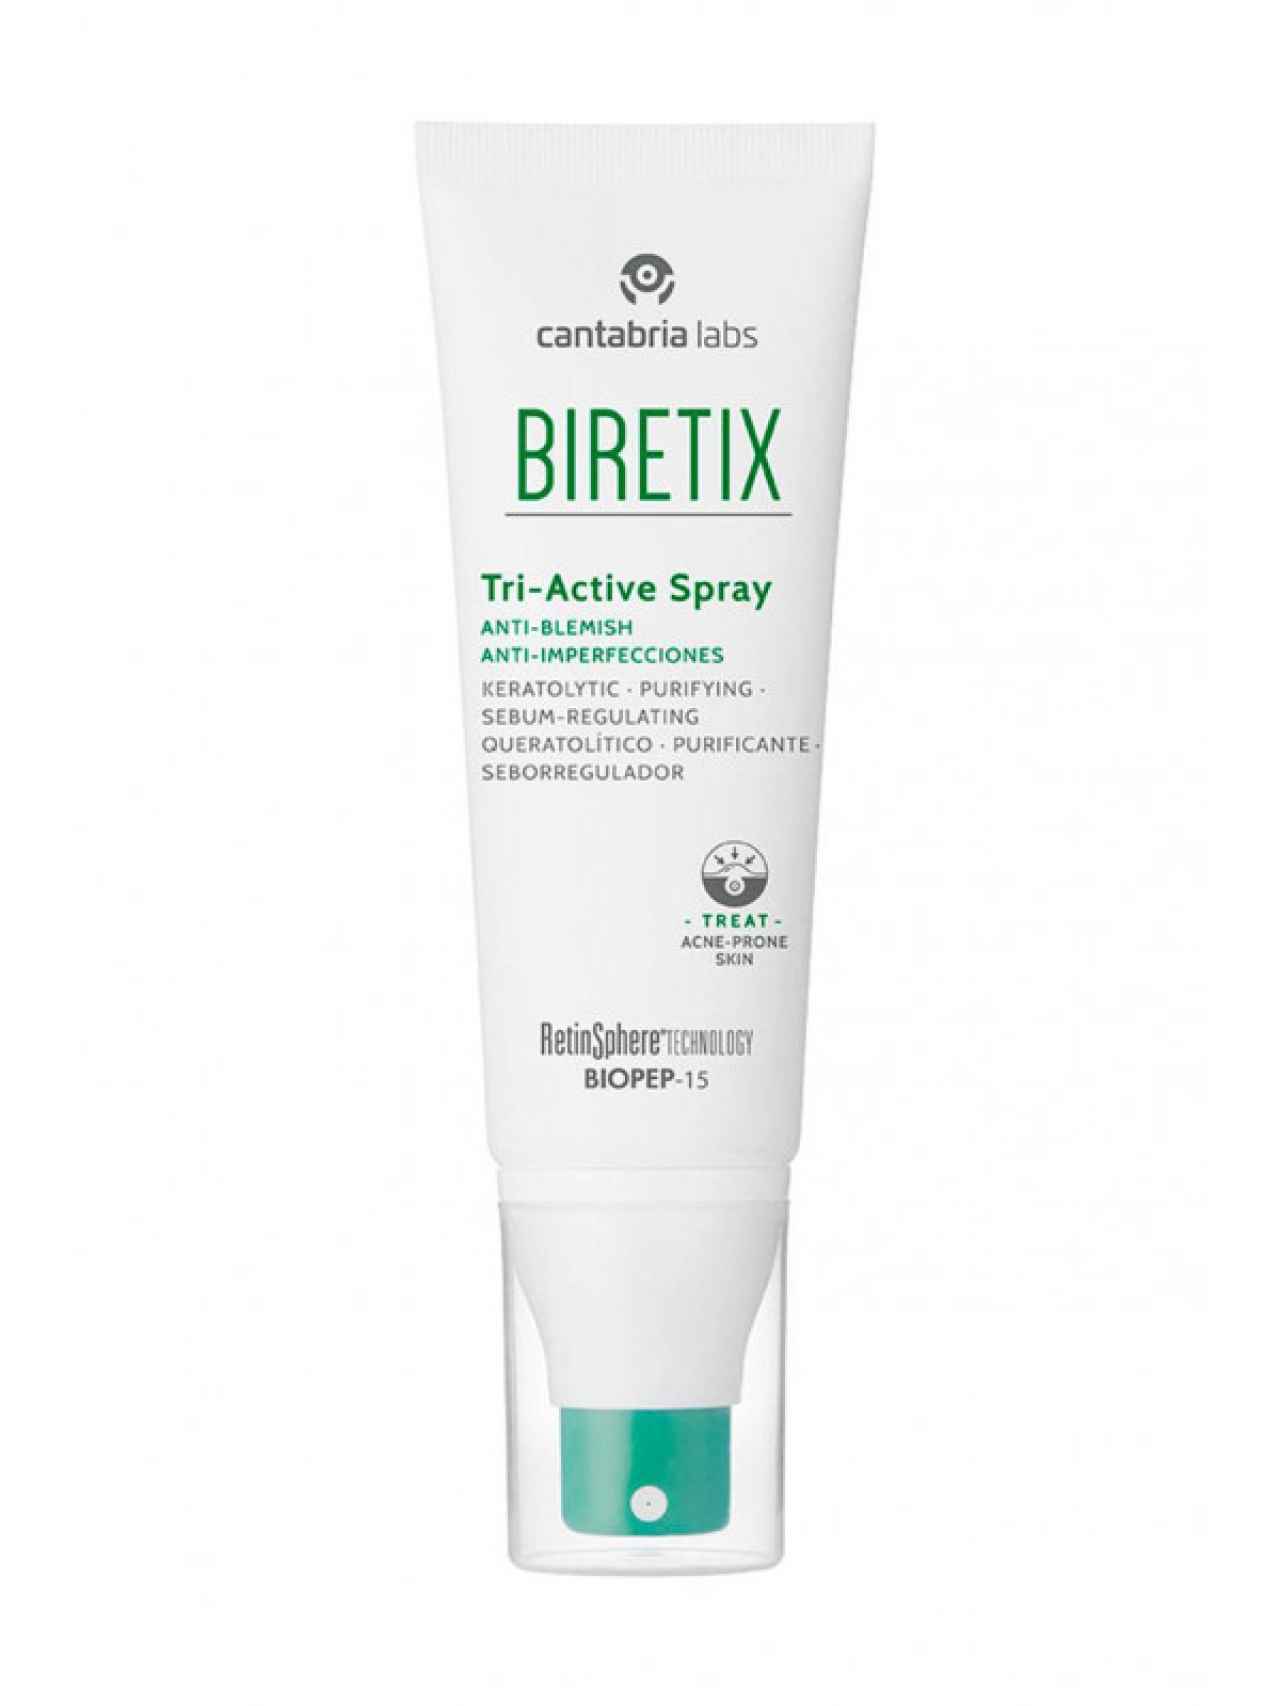 Biretix Ultra Spray Anti-imperfecciones.